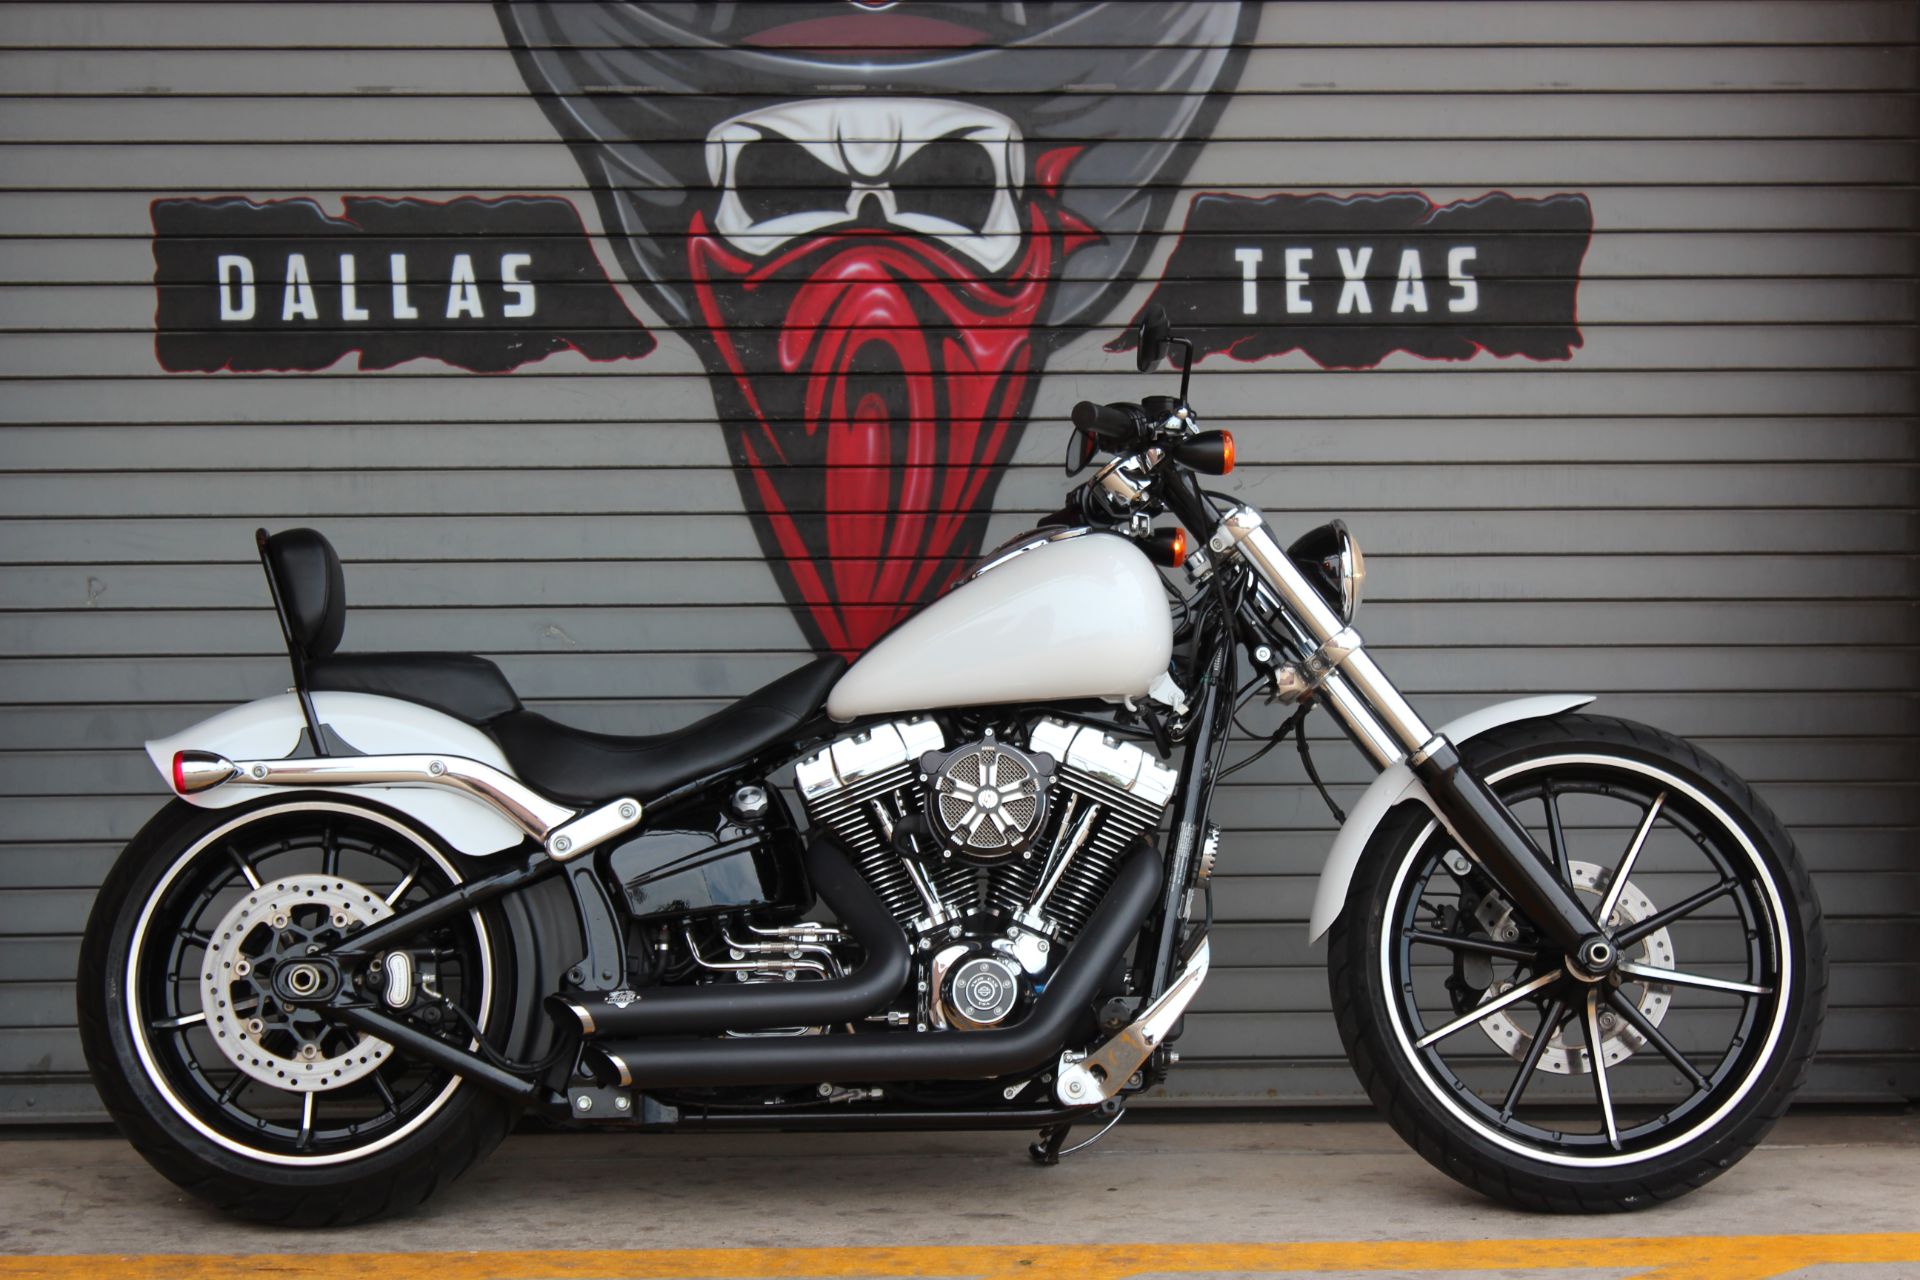 2016 Harley-Davidson Breakout® in Carrollton, Texas - Photo 2